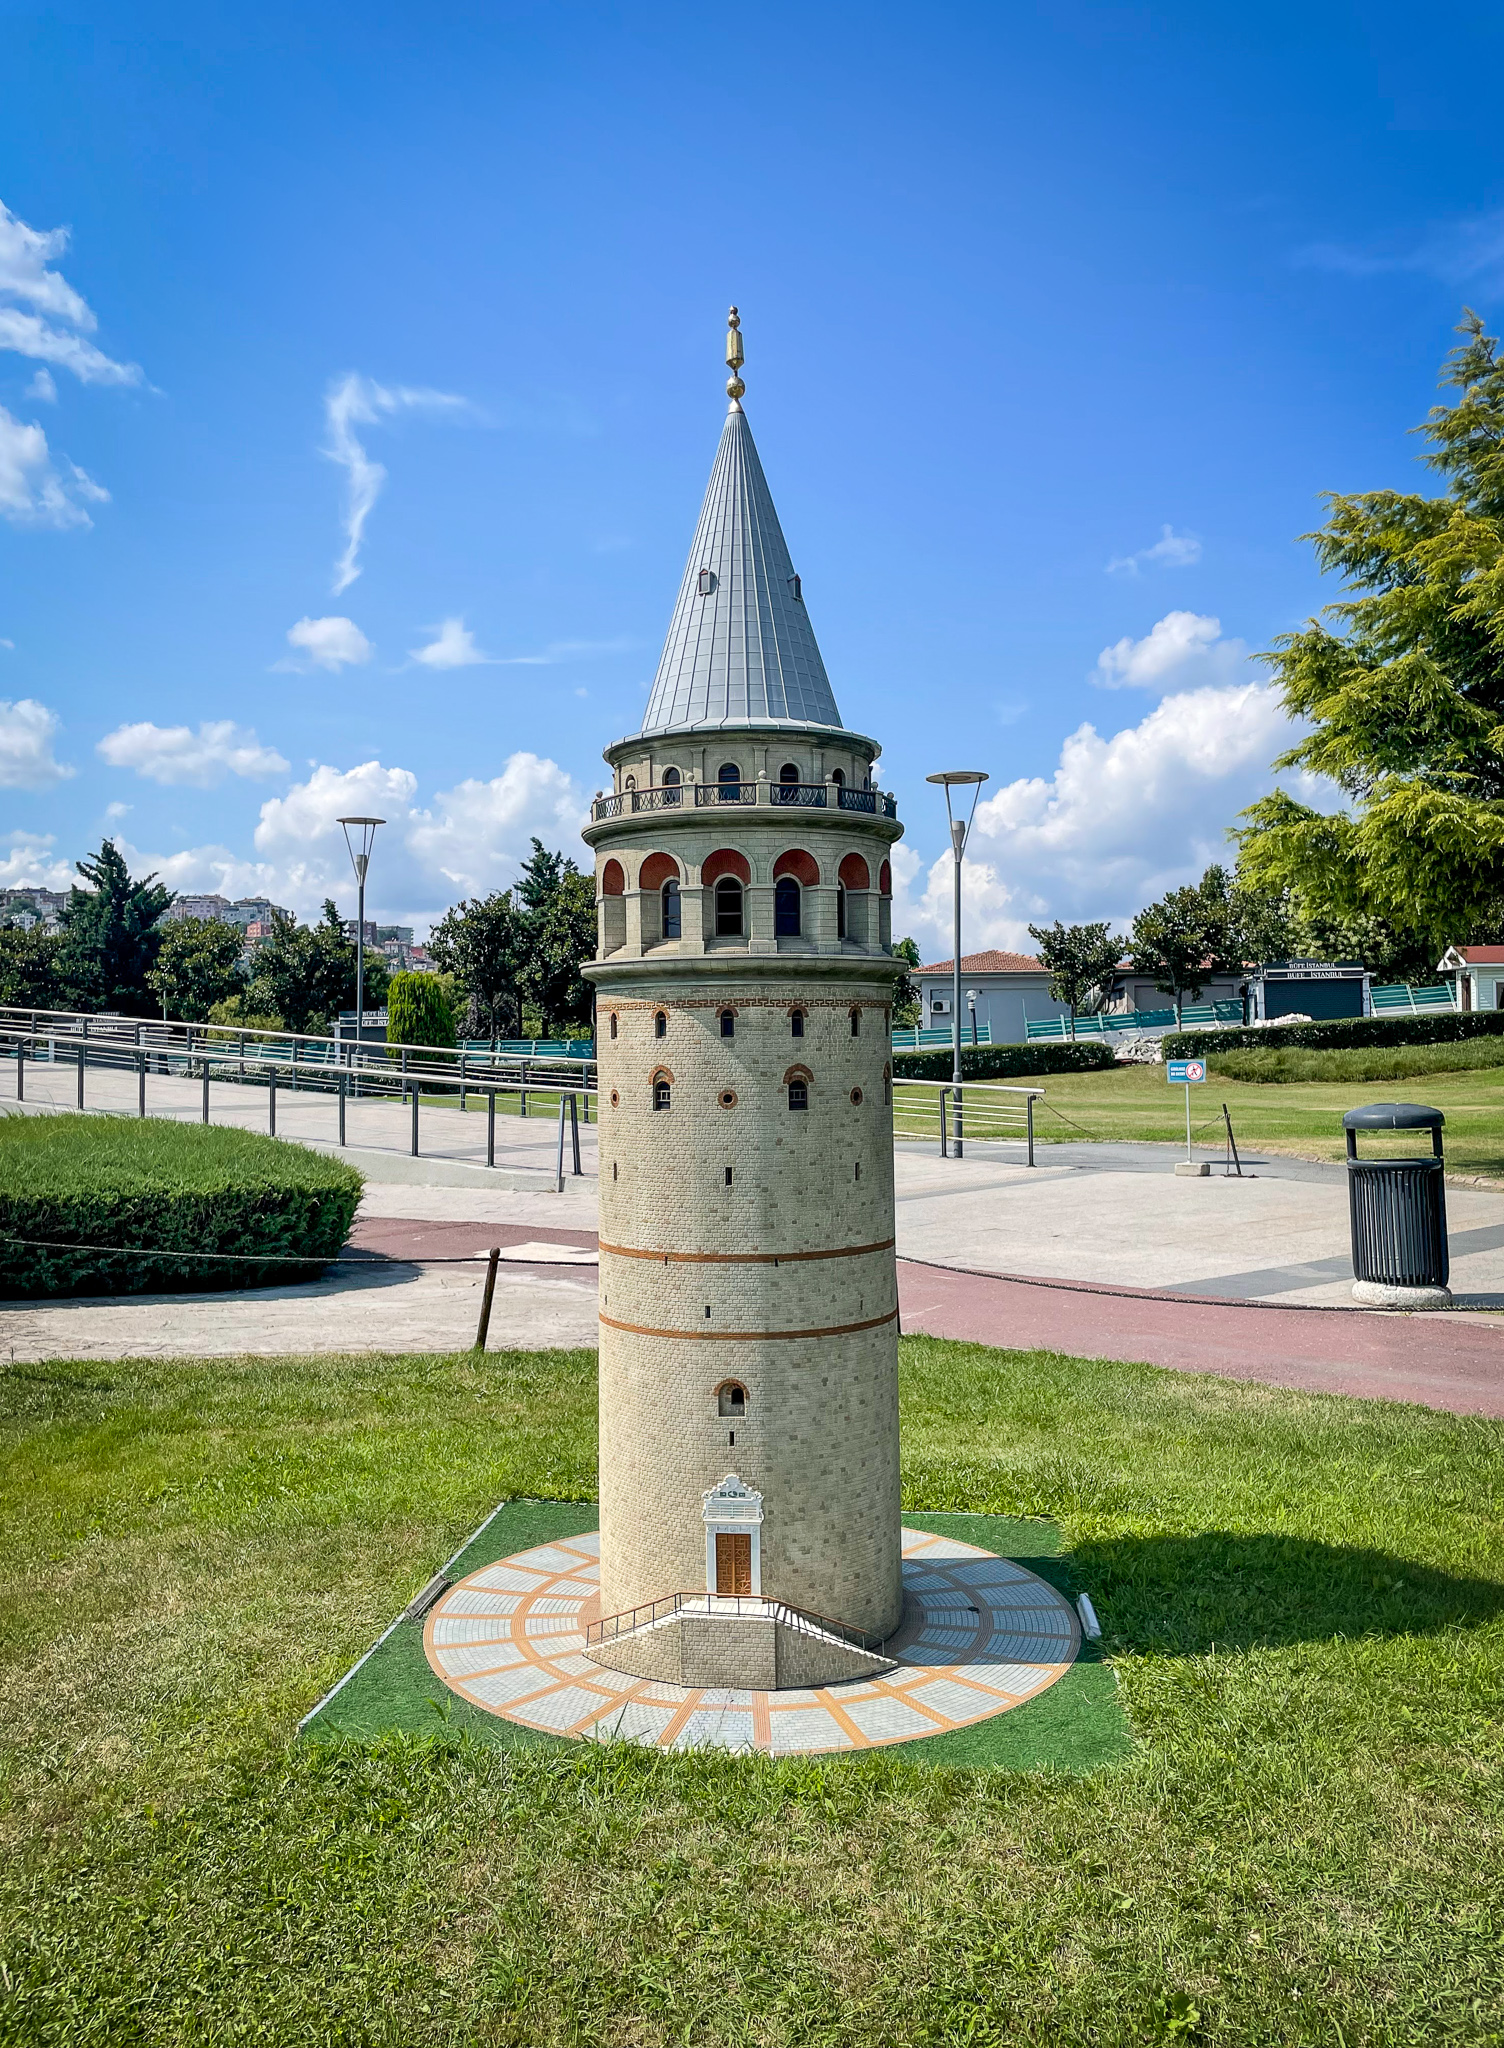 Miniaturk Theme Park Galata Tower Replica